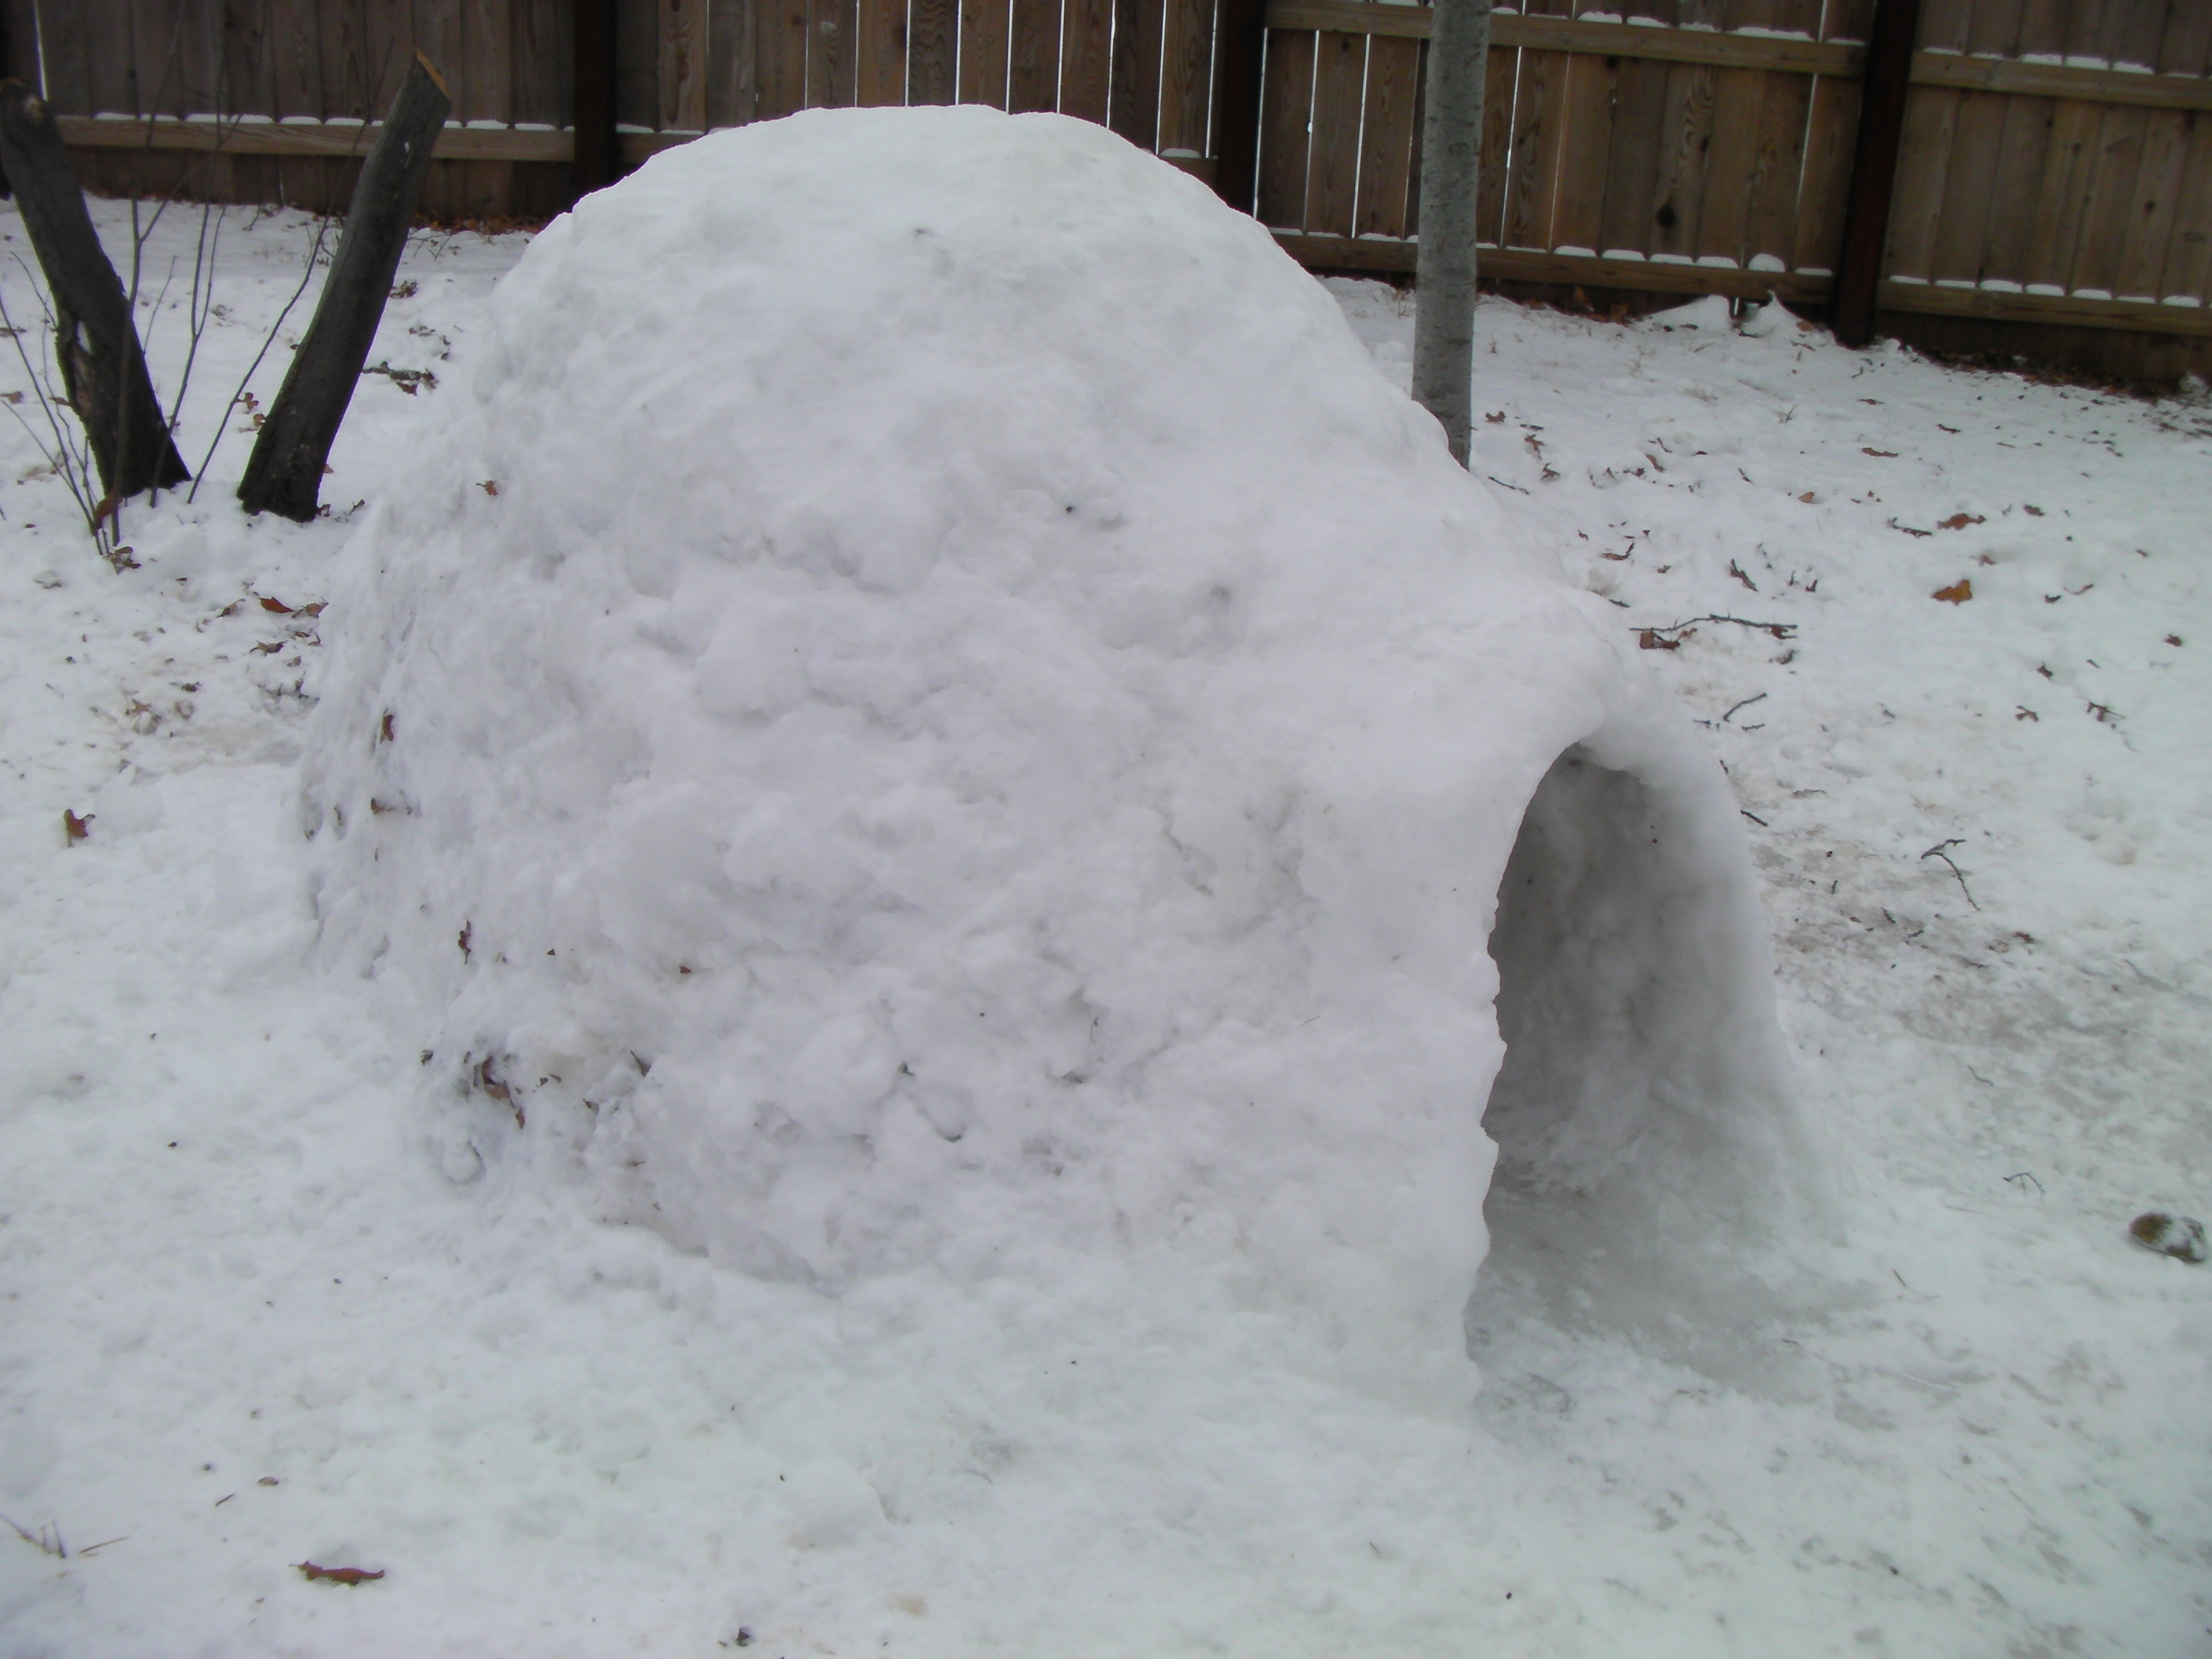 How to make a backyard igloo with powdery snow